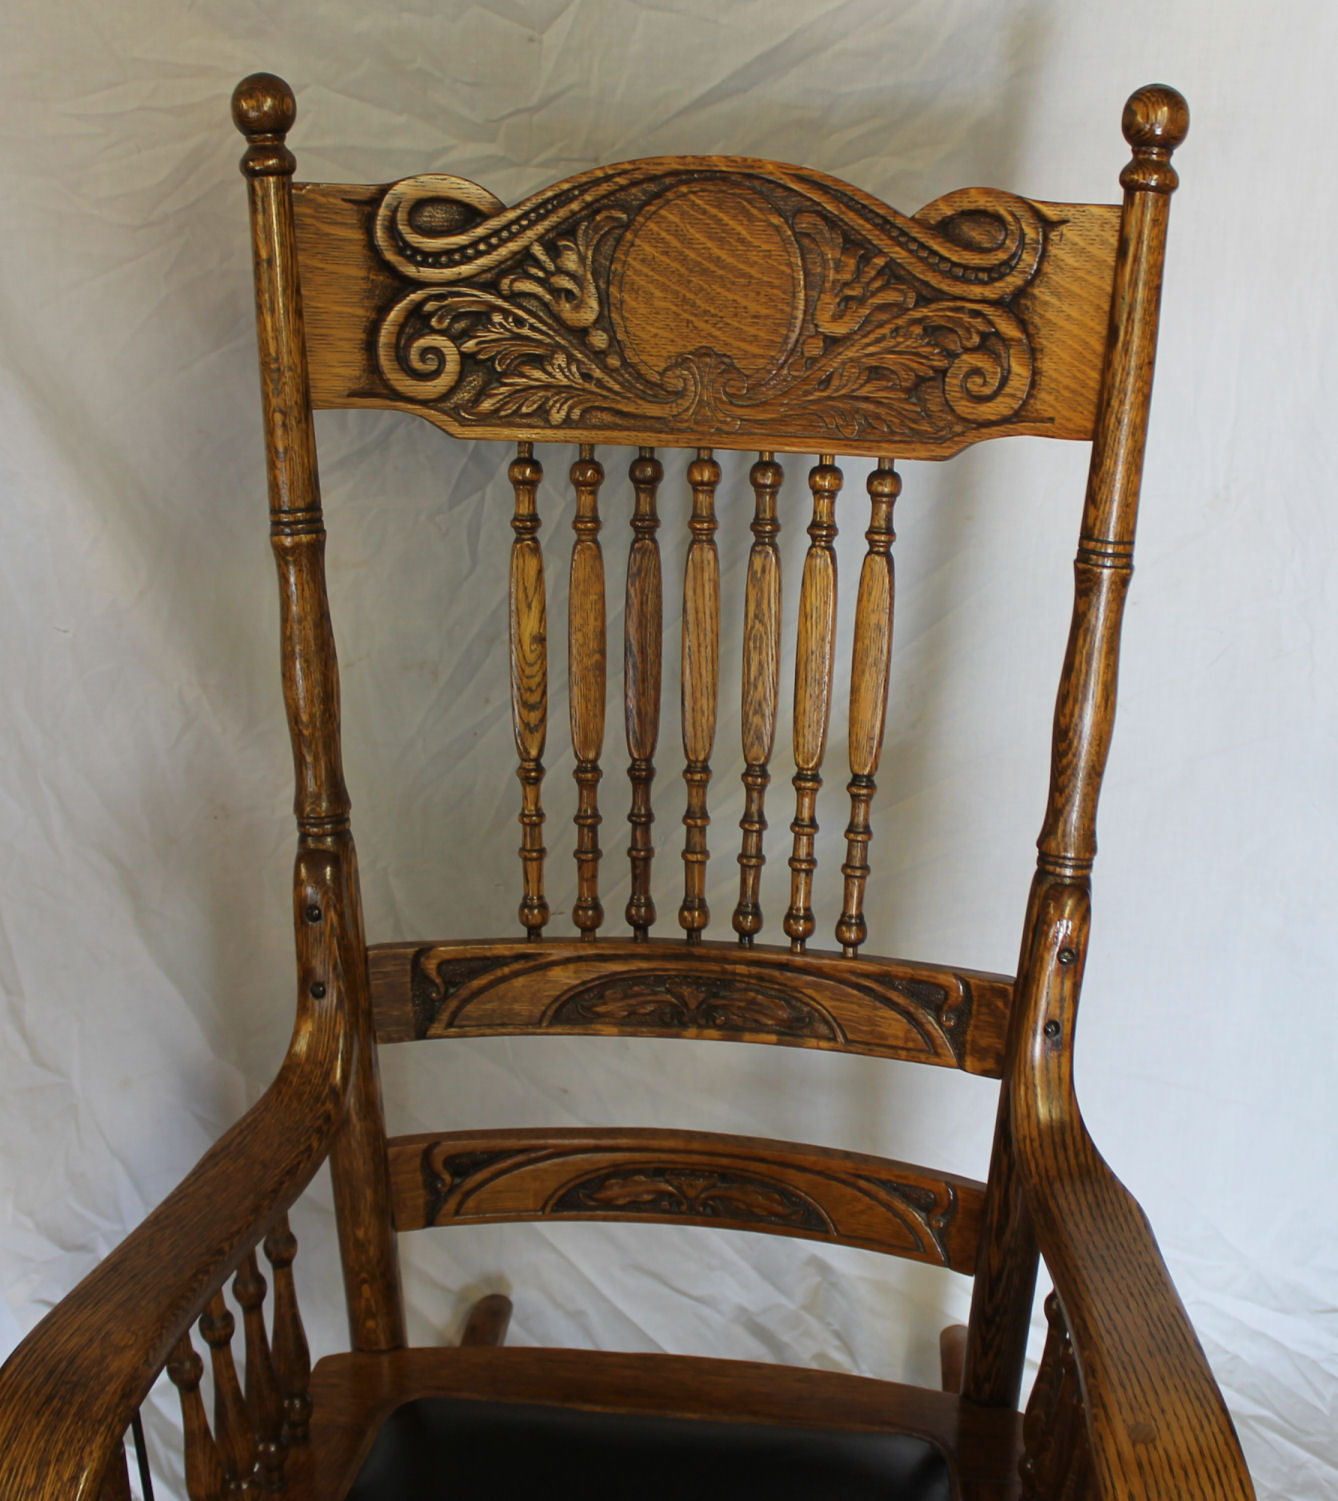 Bargain John's Antiques Antique Oak Carved back Rocking Chair - Bargain
John's Antiques